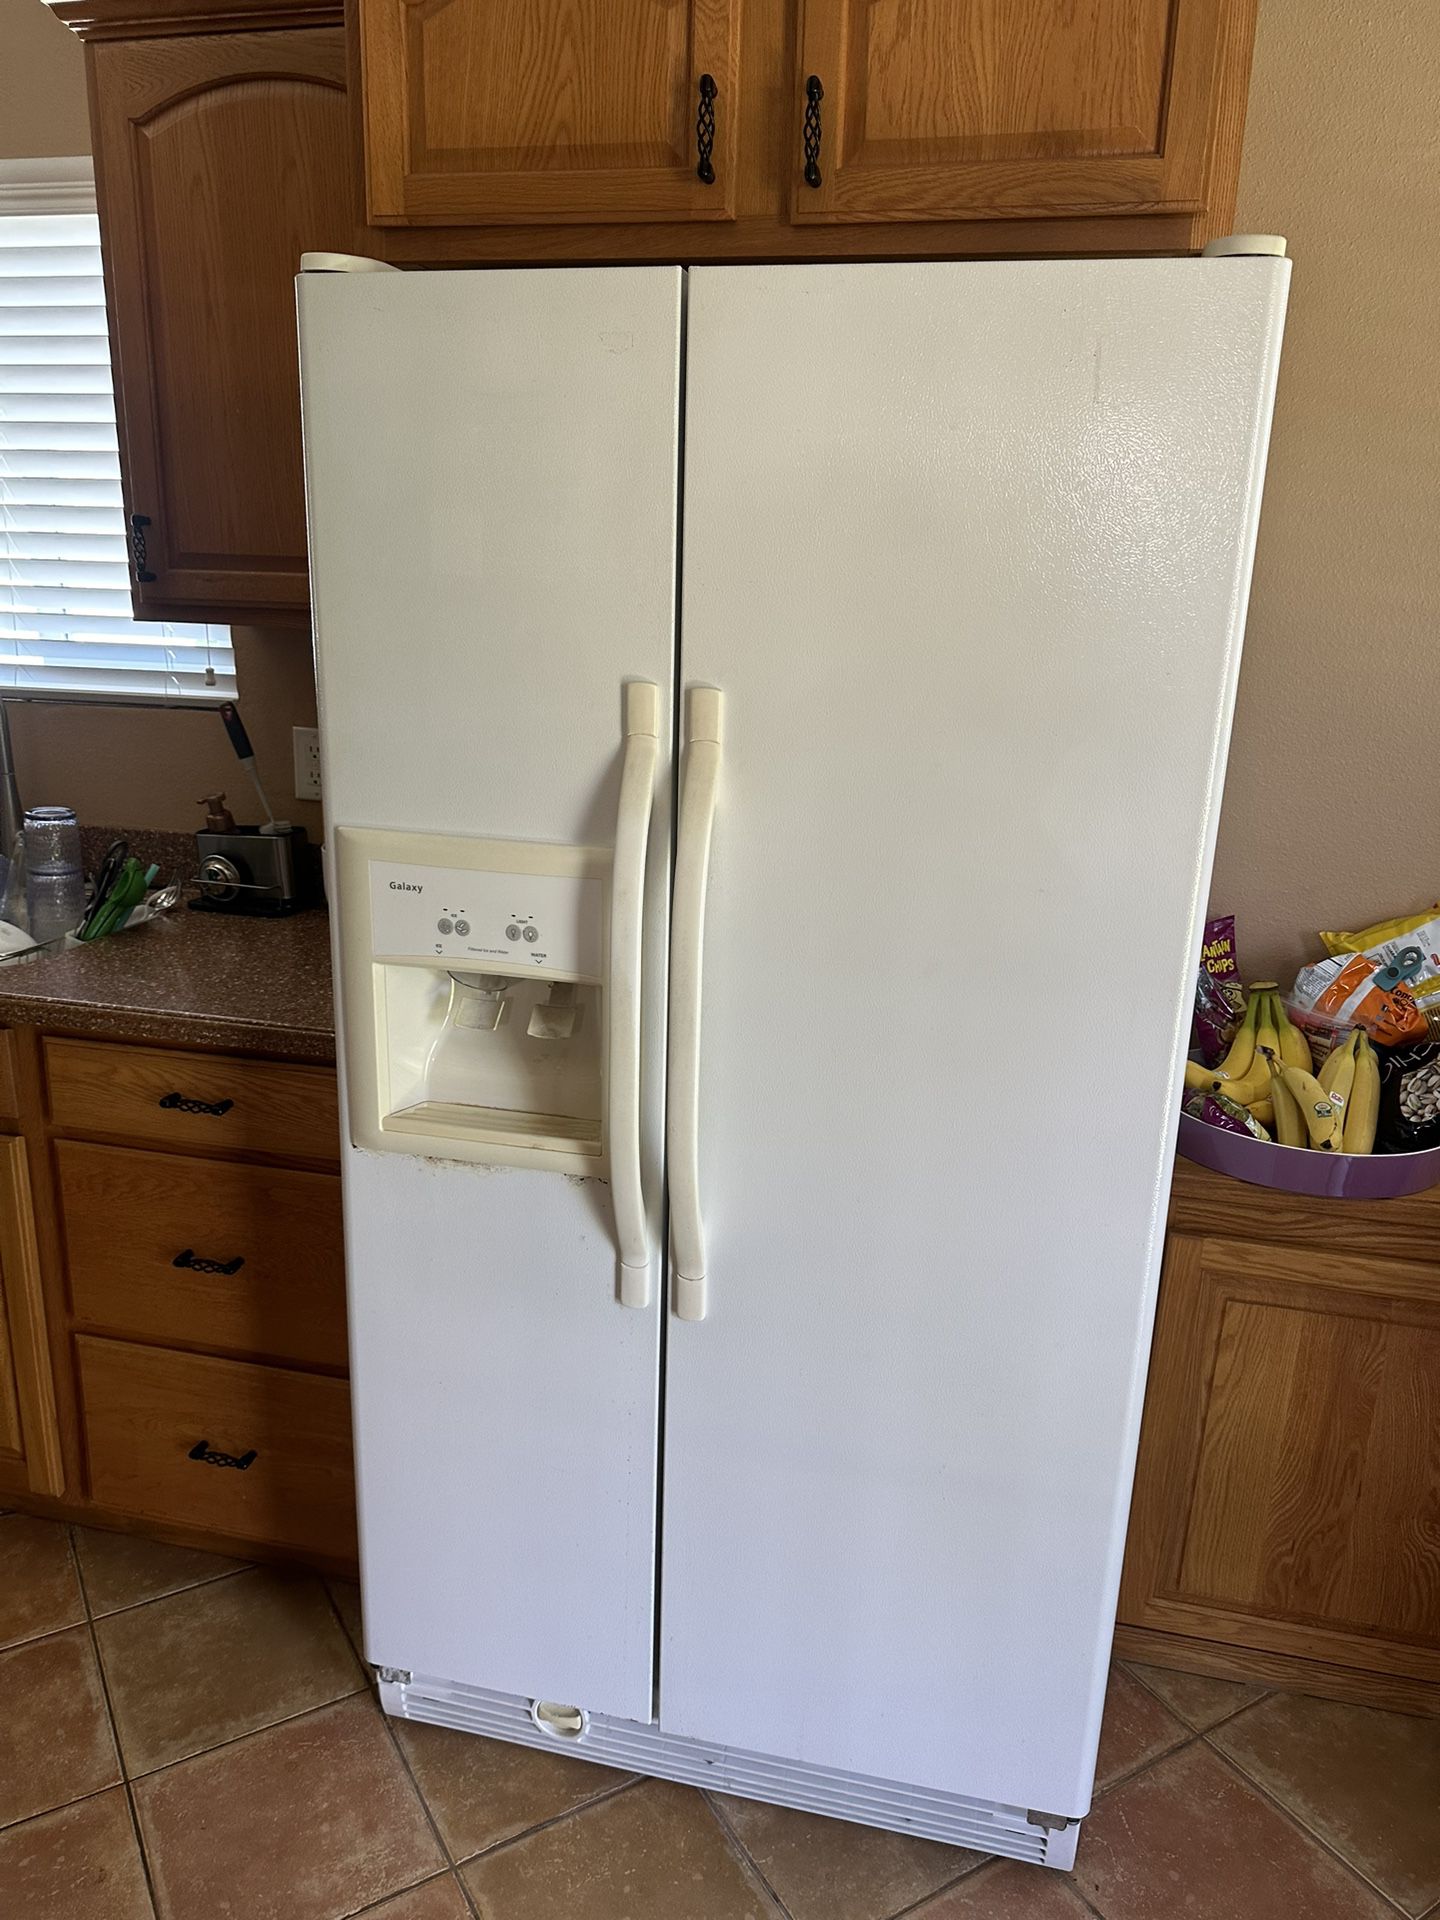 Appliances # Refrigerator # Stove  # Dishwasher 